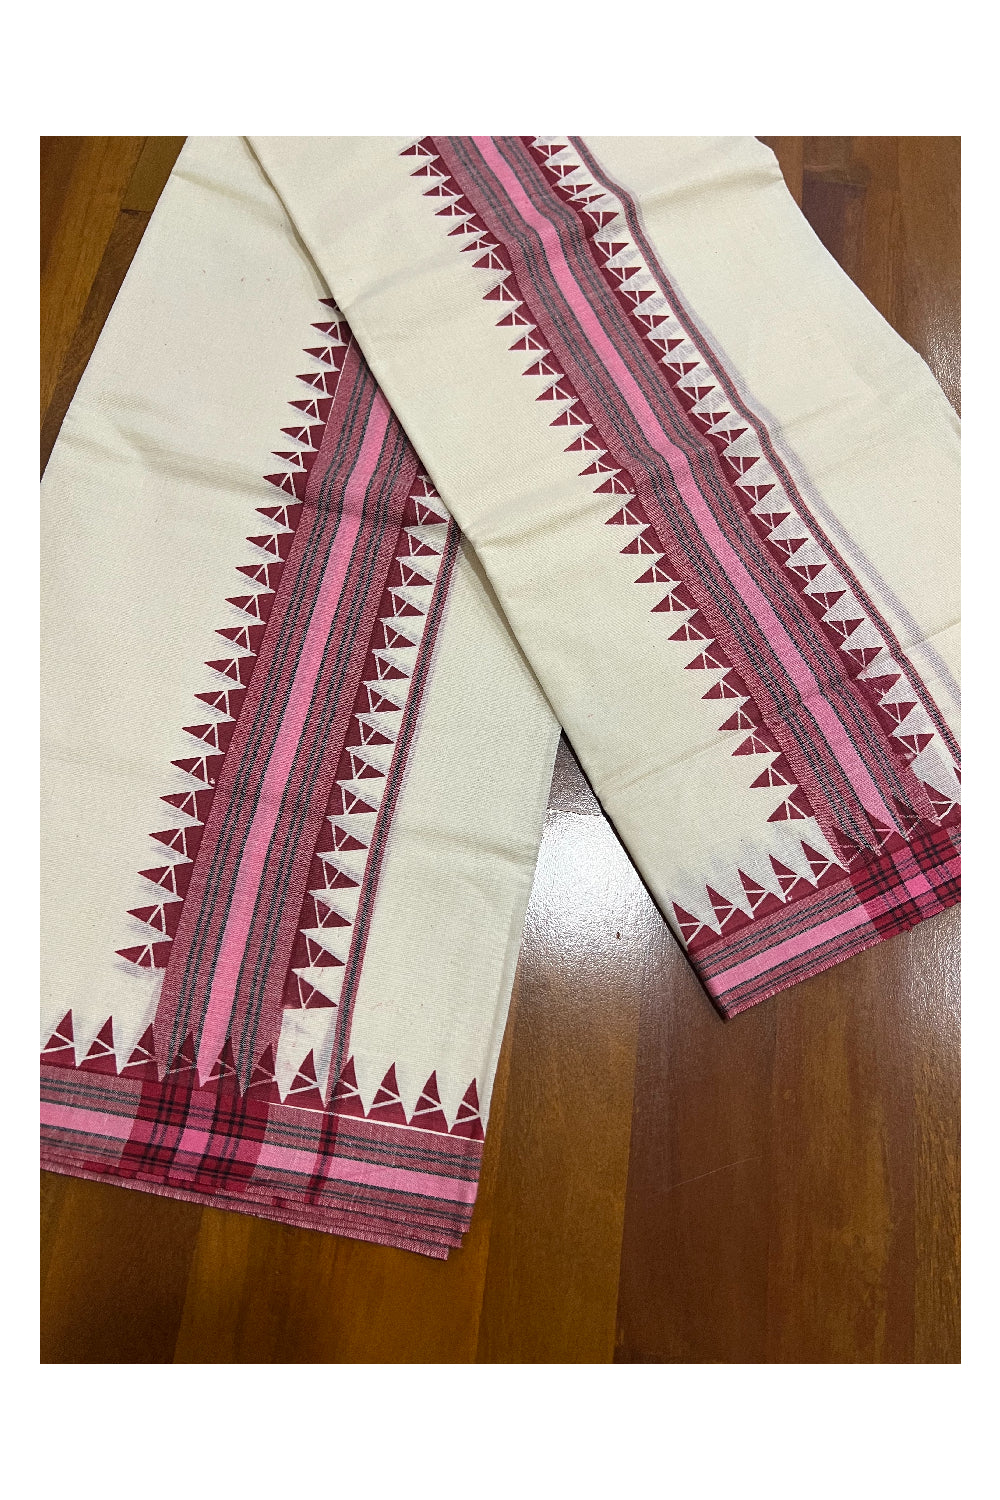 Kerala Cotton Mulloth Mundum Neriyathum Single (Set Mundu) with Maroon Temple Block Prints on Border (Extra Soft Cotton)